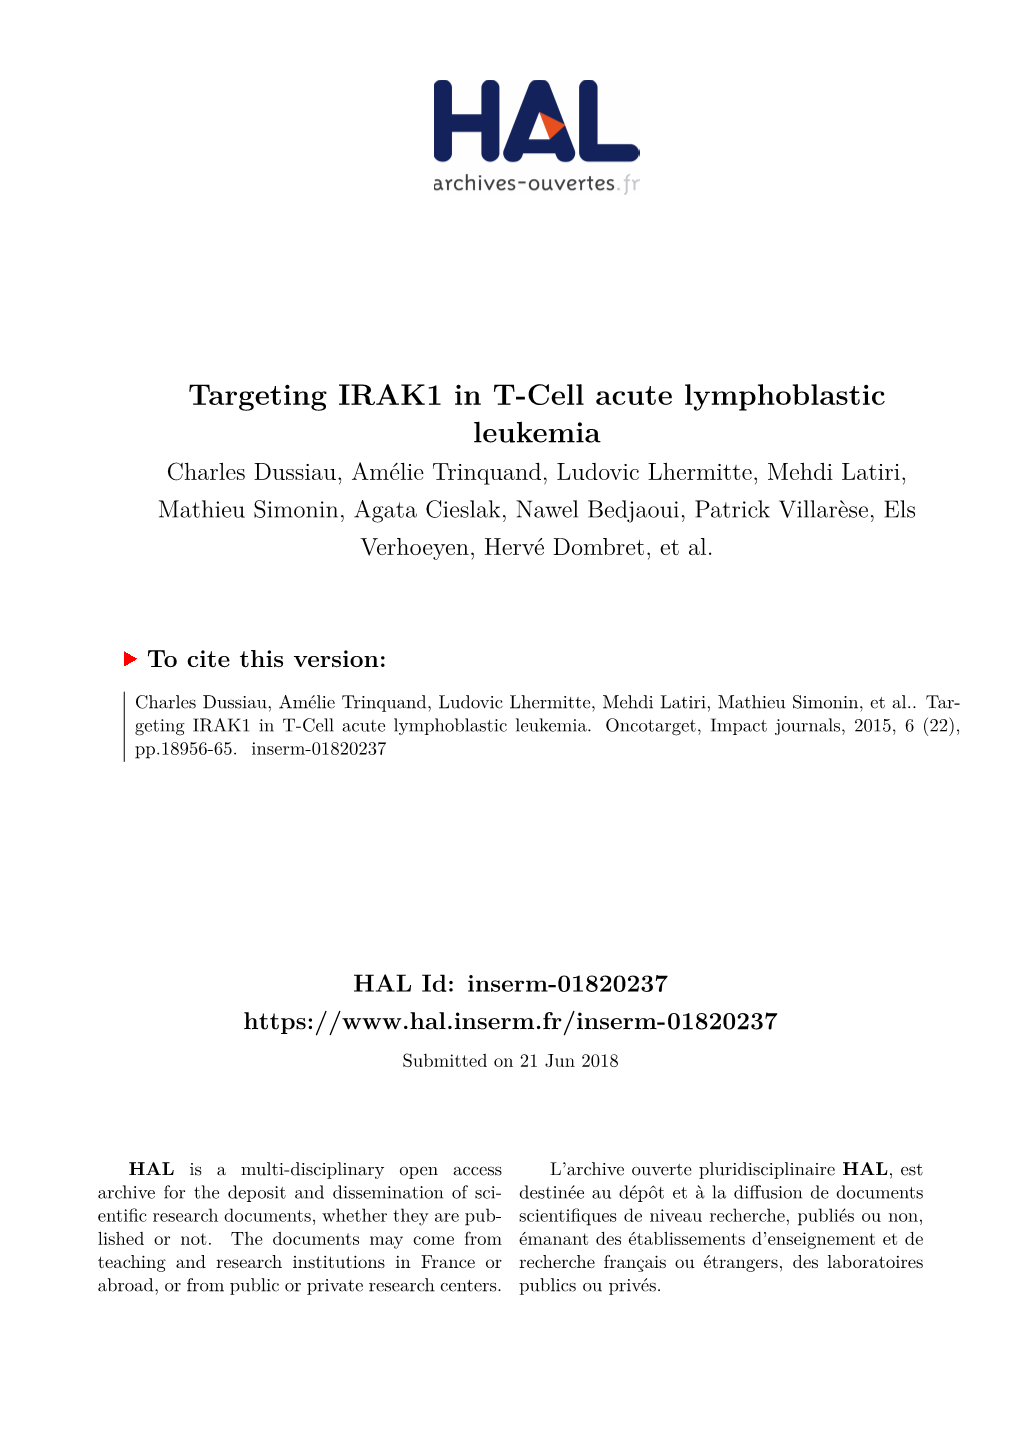 Targeting IRAK1 in T-Cell Acute Lymphoblastic Leukemia